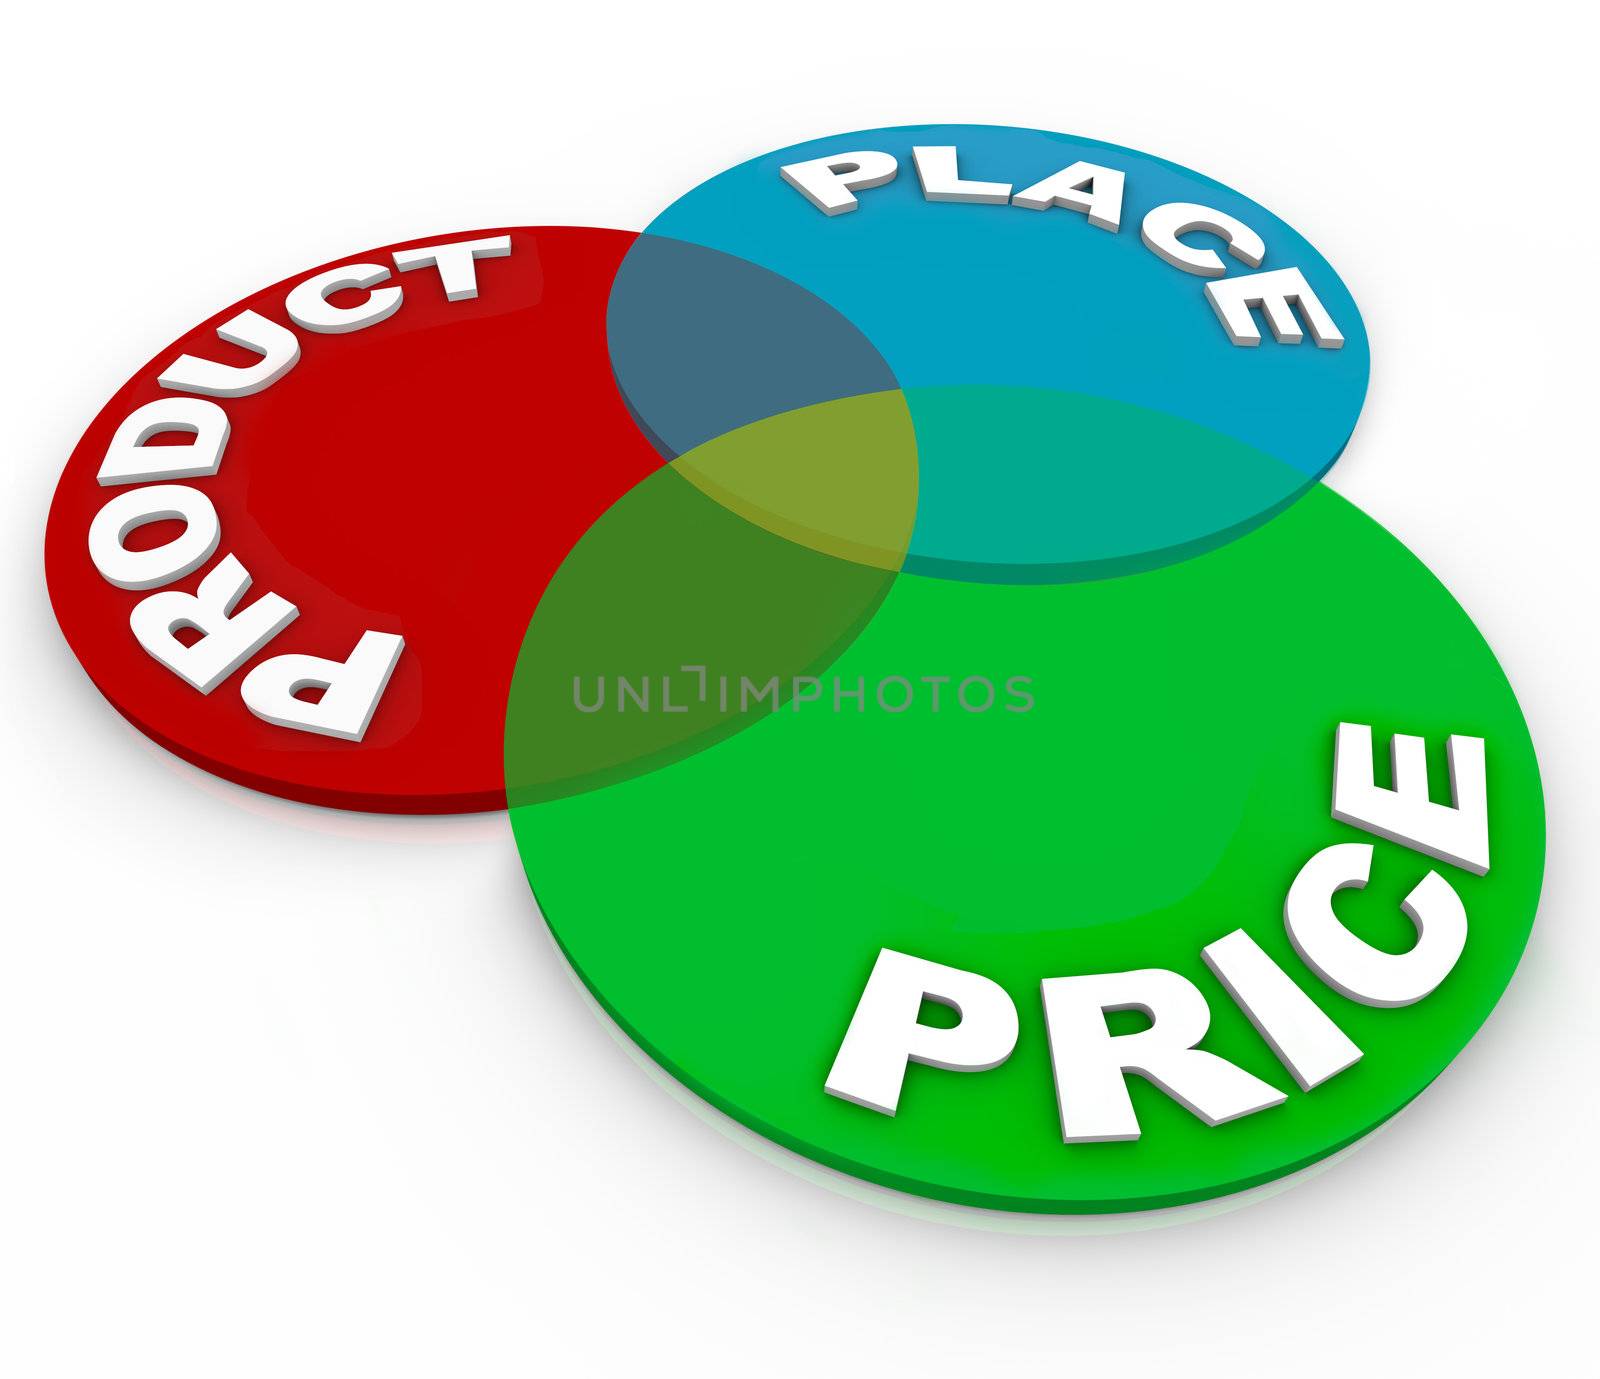 Product Place Price Marketing Principles Venn Diagram by iQoncept